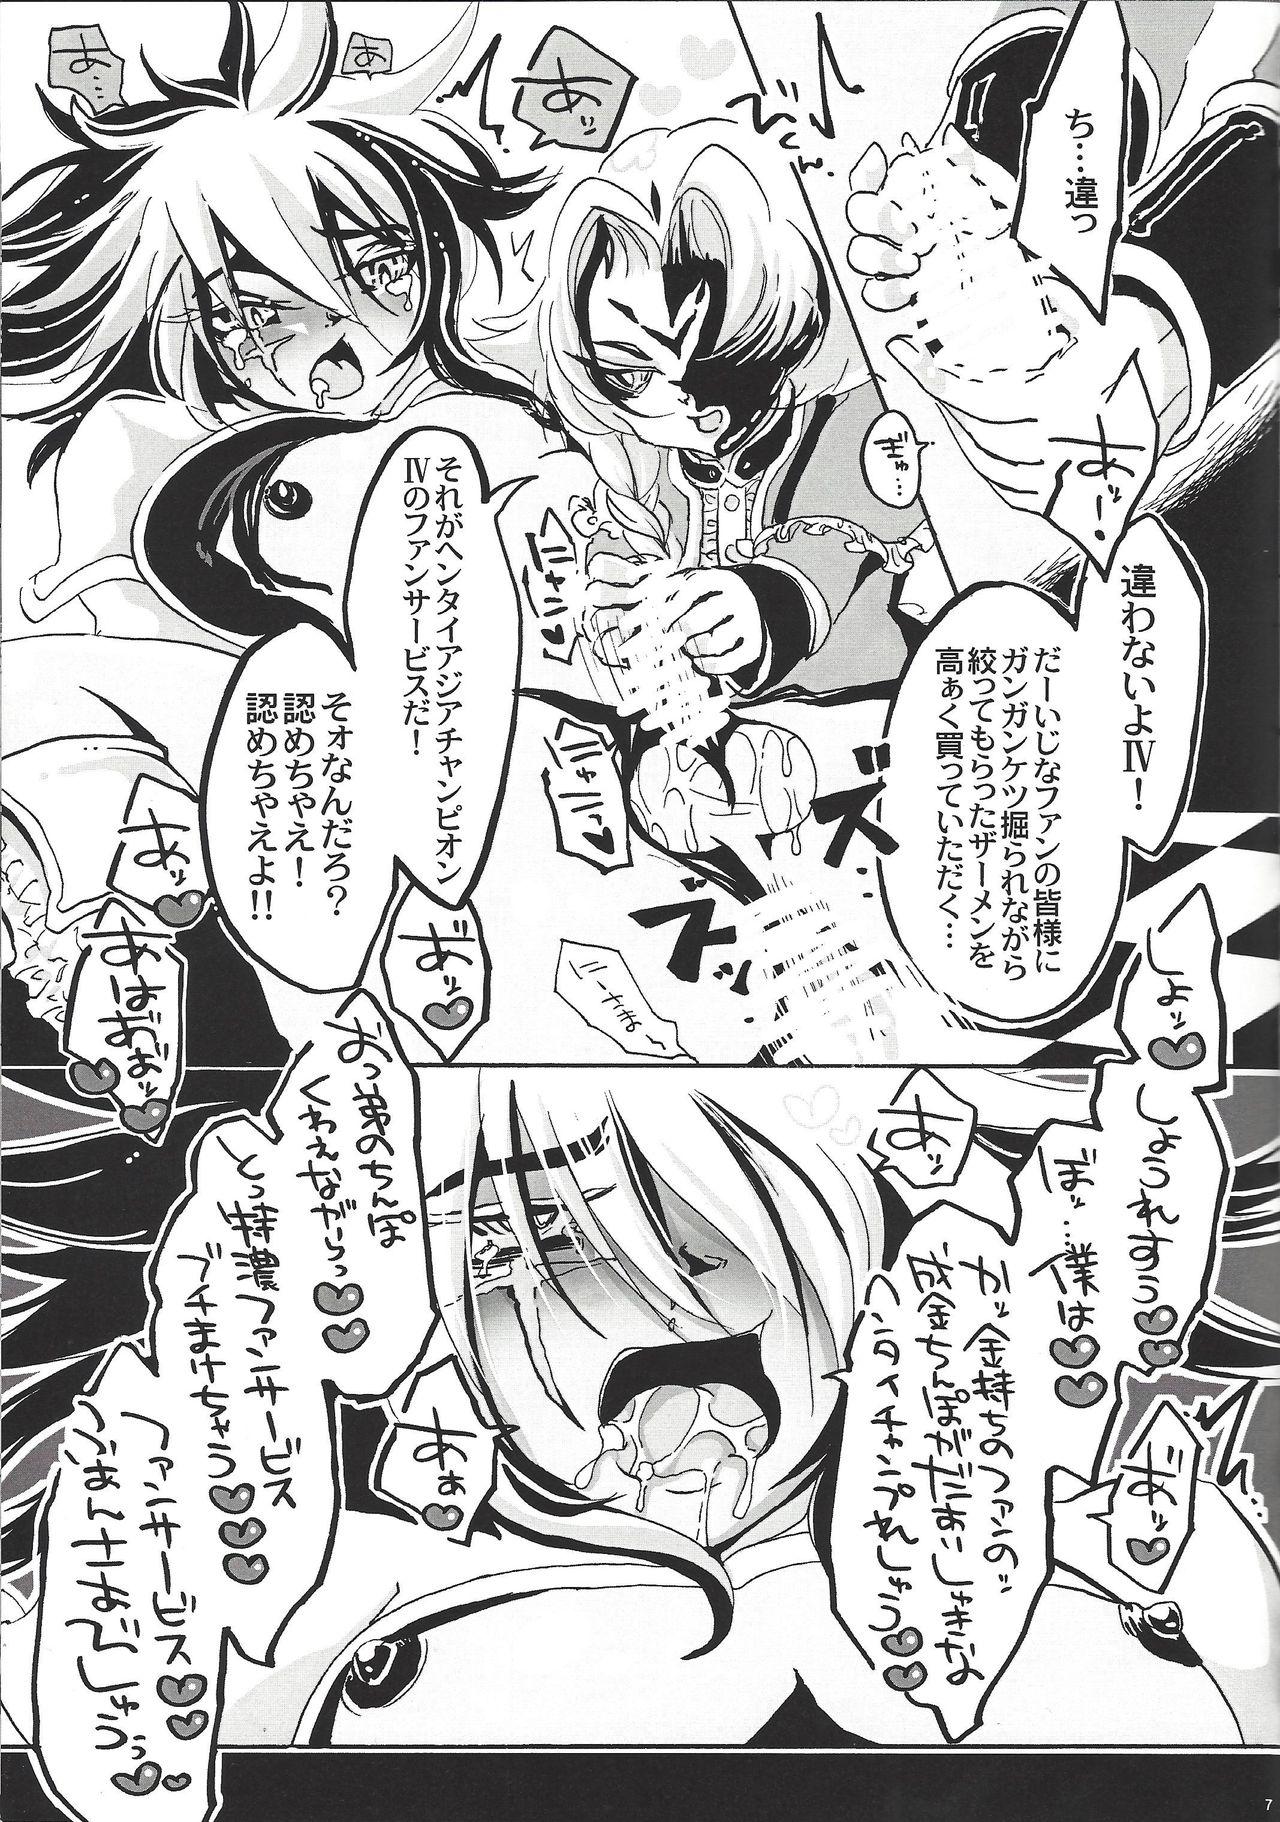 Blacksonboys Bokura, zetsubo no mayoigo ni natte - Yu gi oh zexal Scene - Page 8